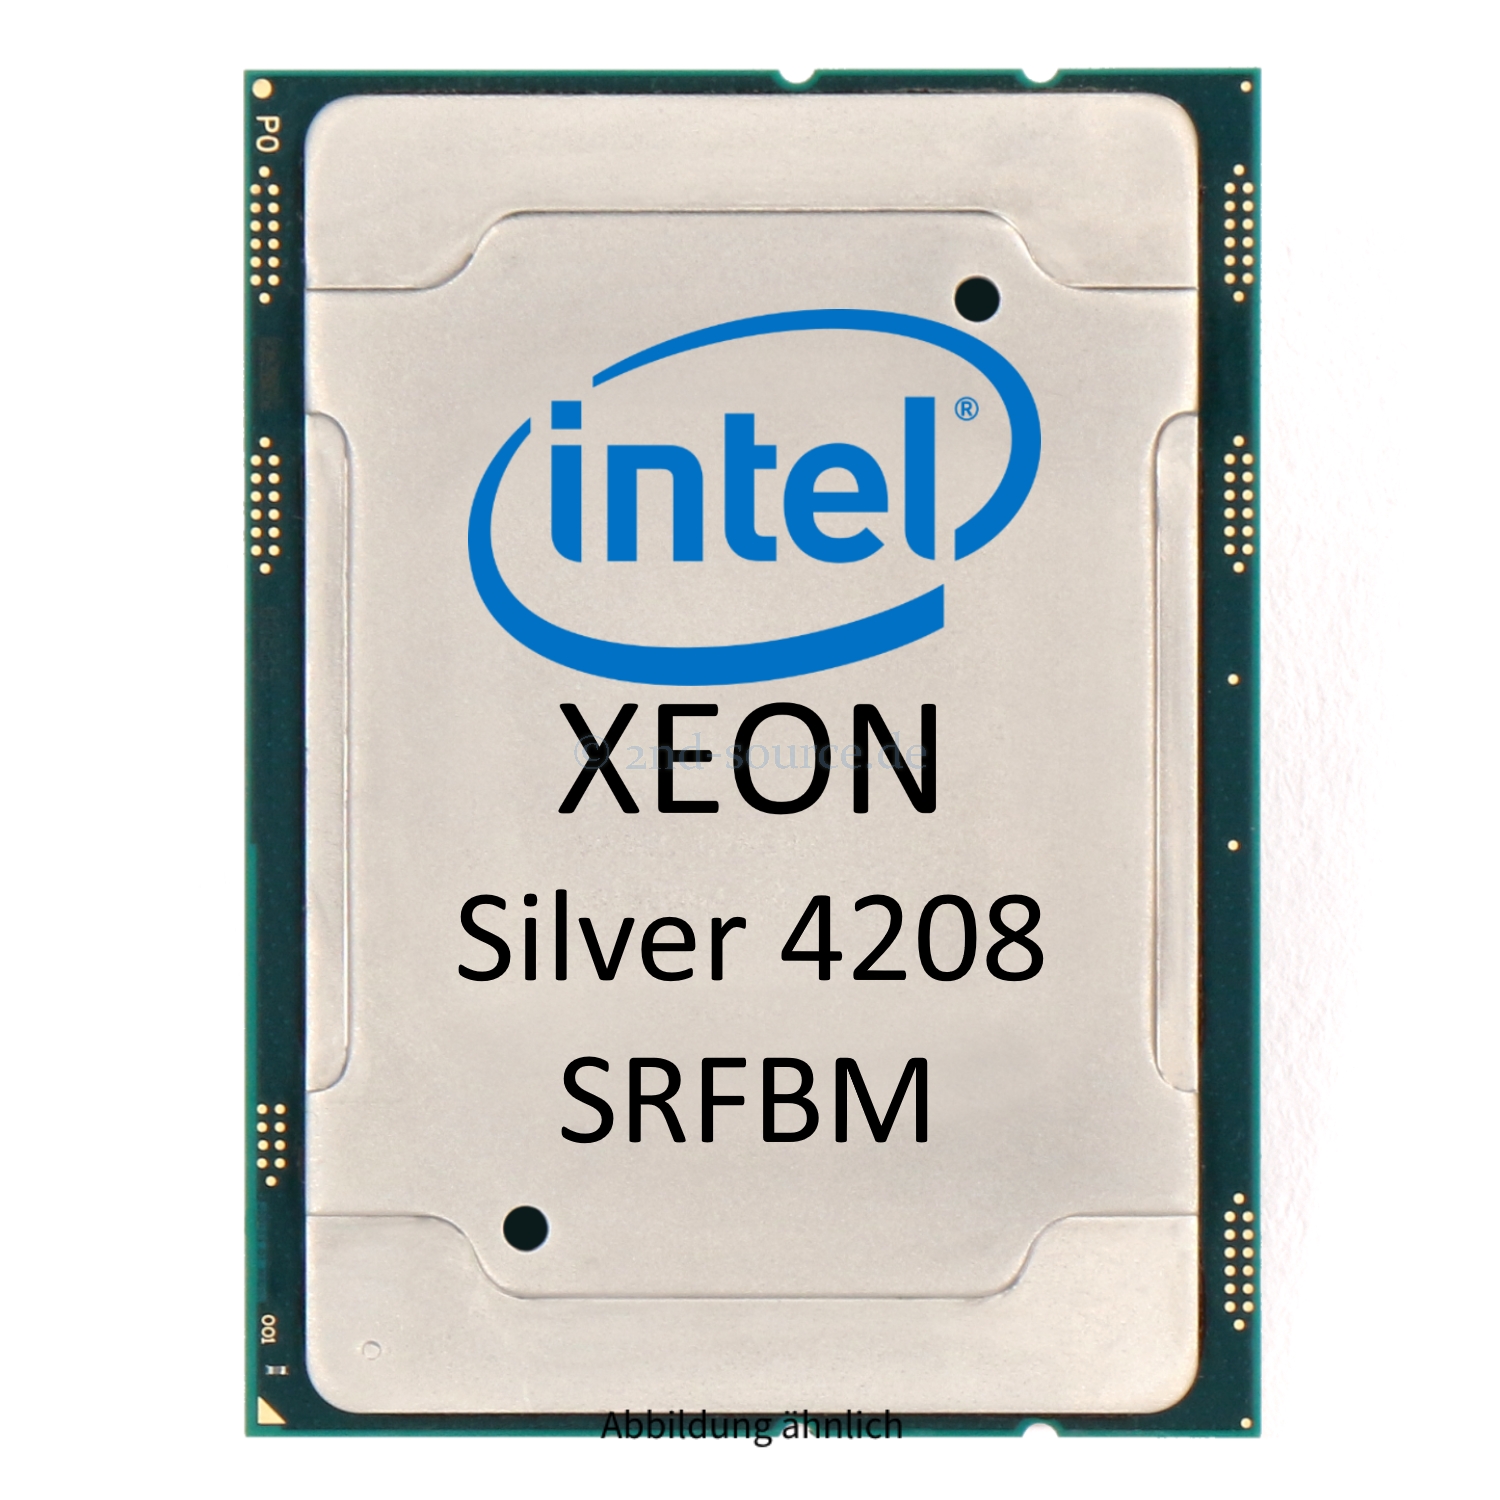 Intel Xeon Silver 4208 2.10GHz 11MB 8-Core CPU 85W SRFBM CD8069503956401